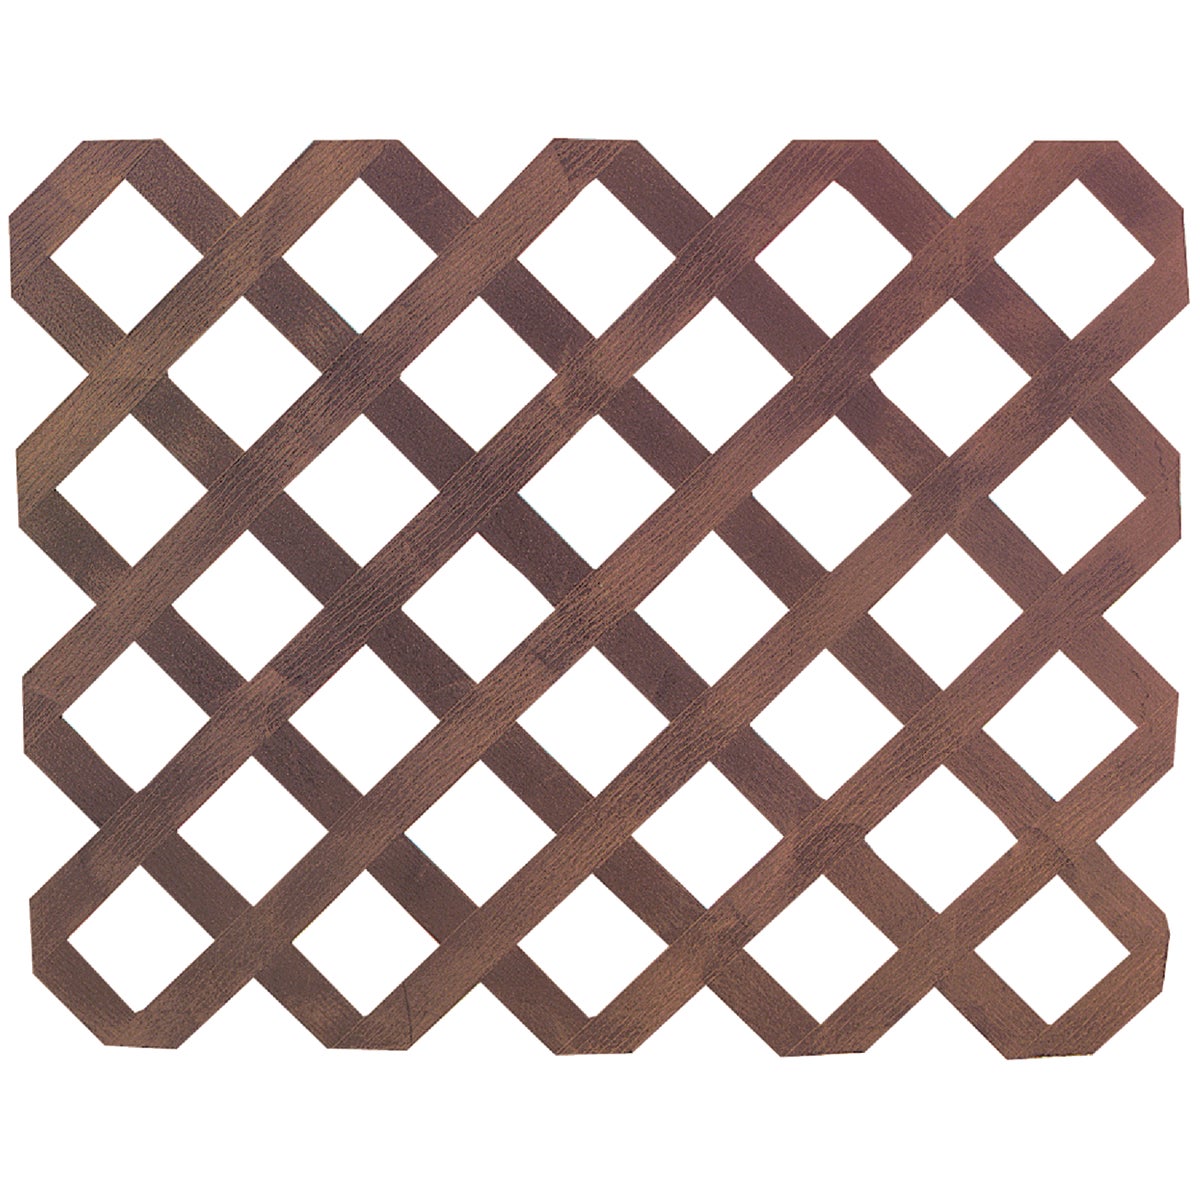 Item 172545, Heavy-duty cedar lattice featuring all clinch stapled joints.